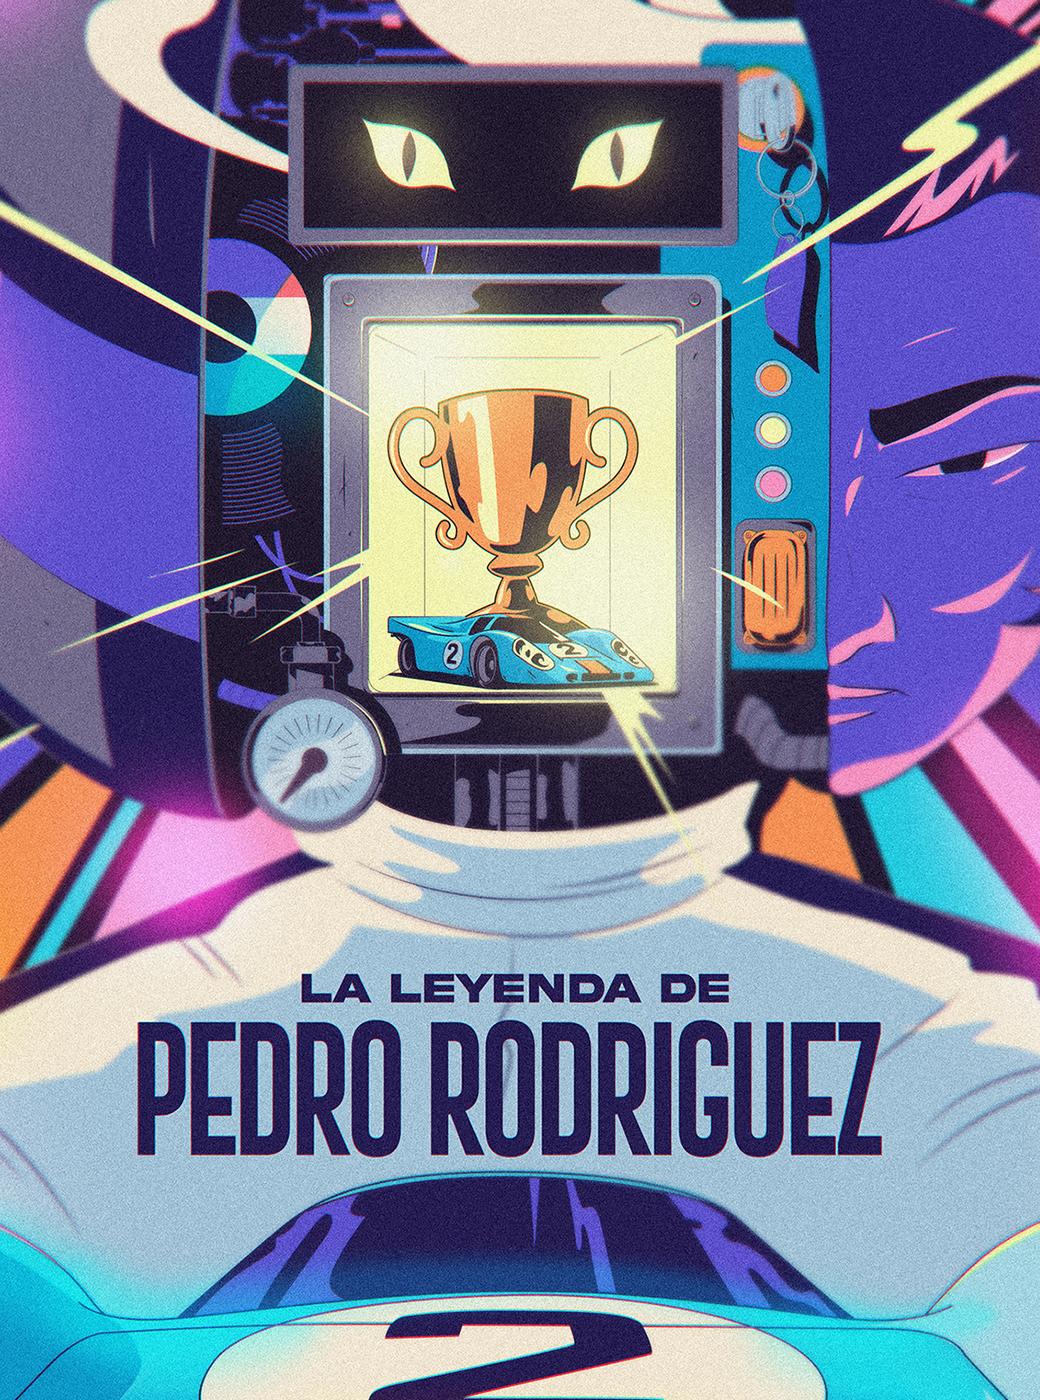 Porsche — The Legend of Pedro Rodriguez